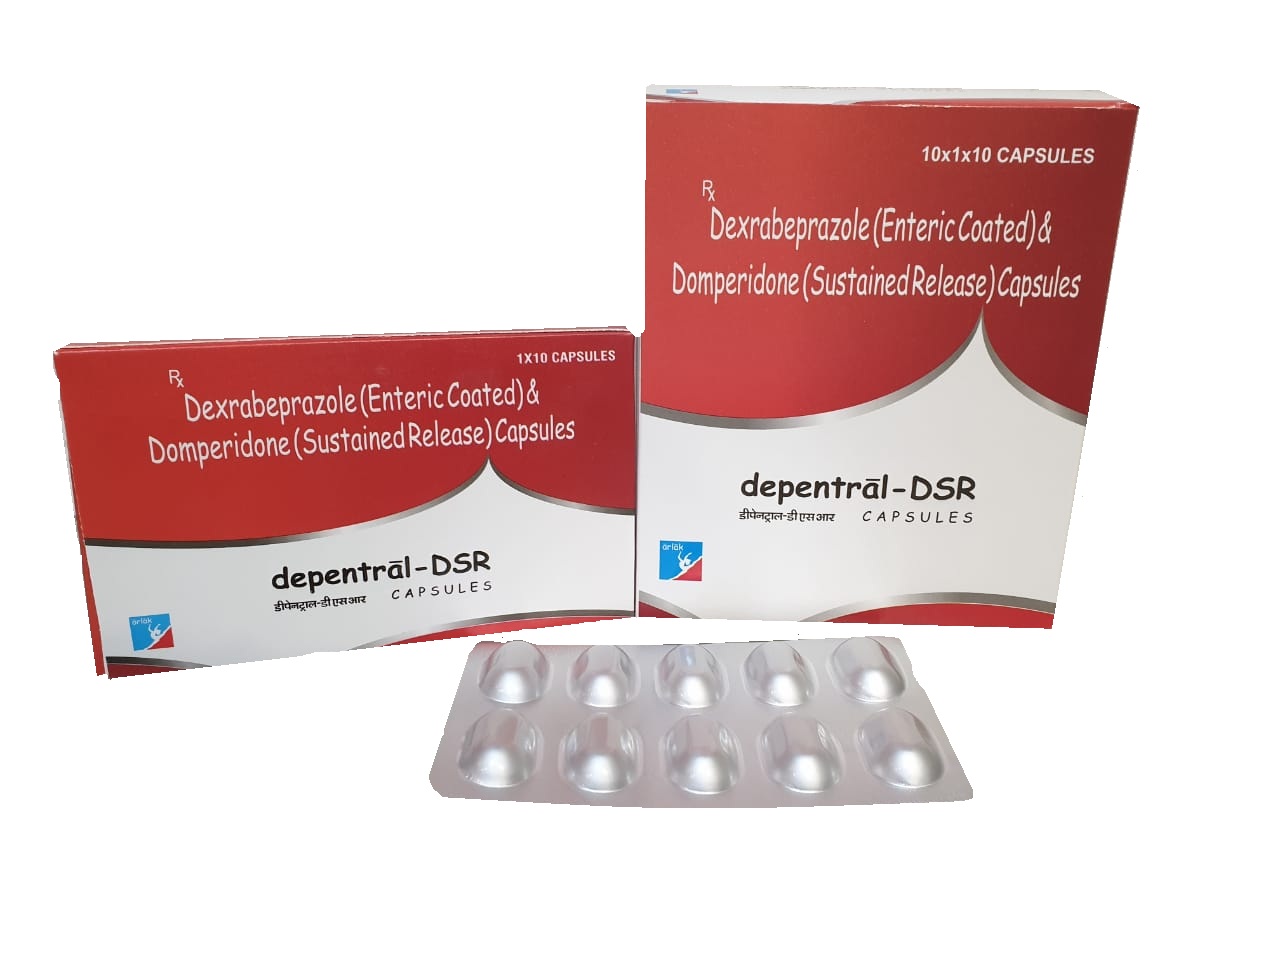 DEPENTRAL-DSR Capsules